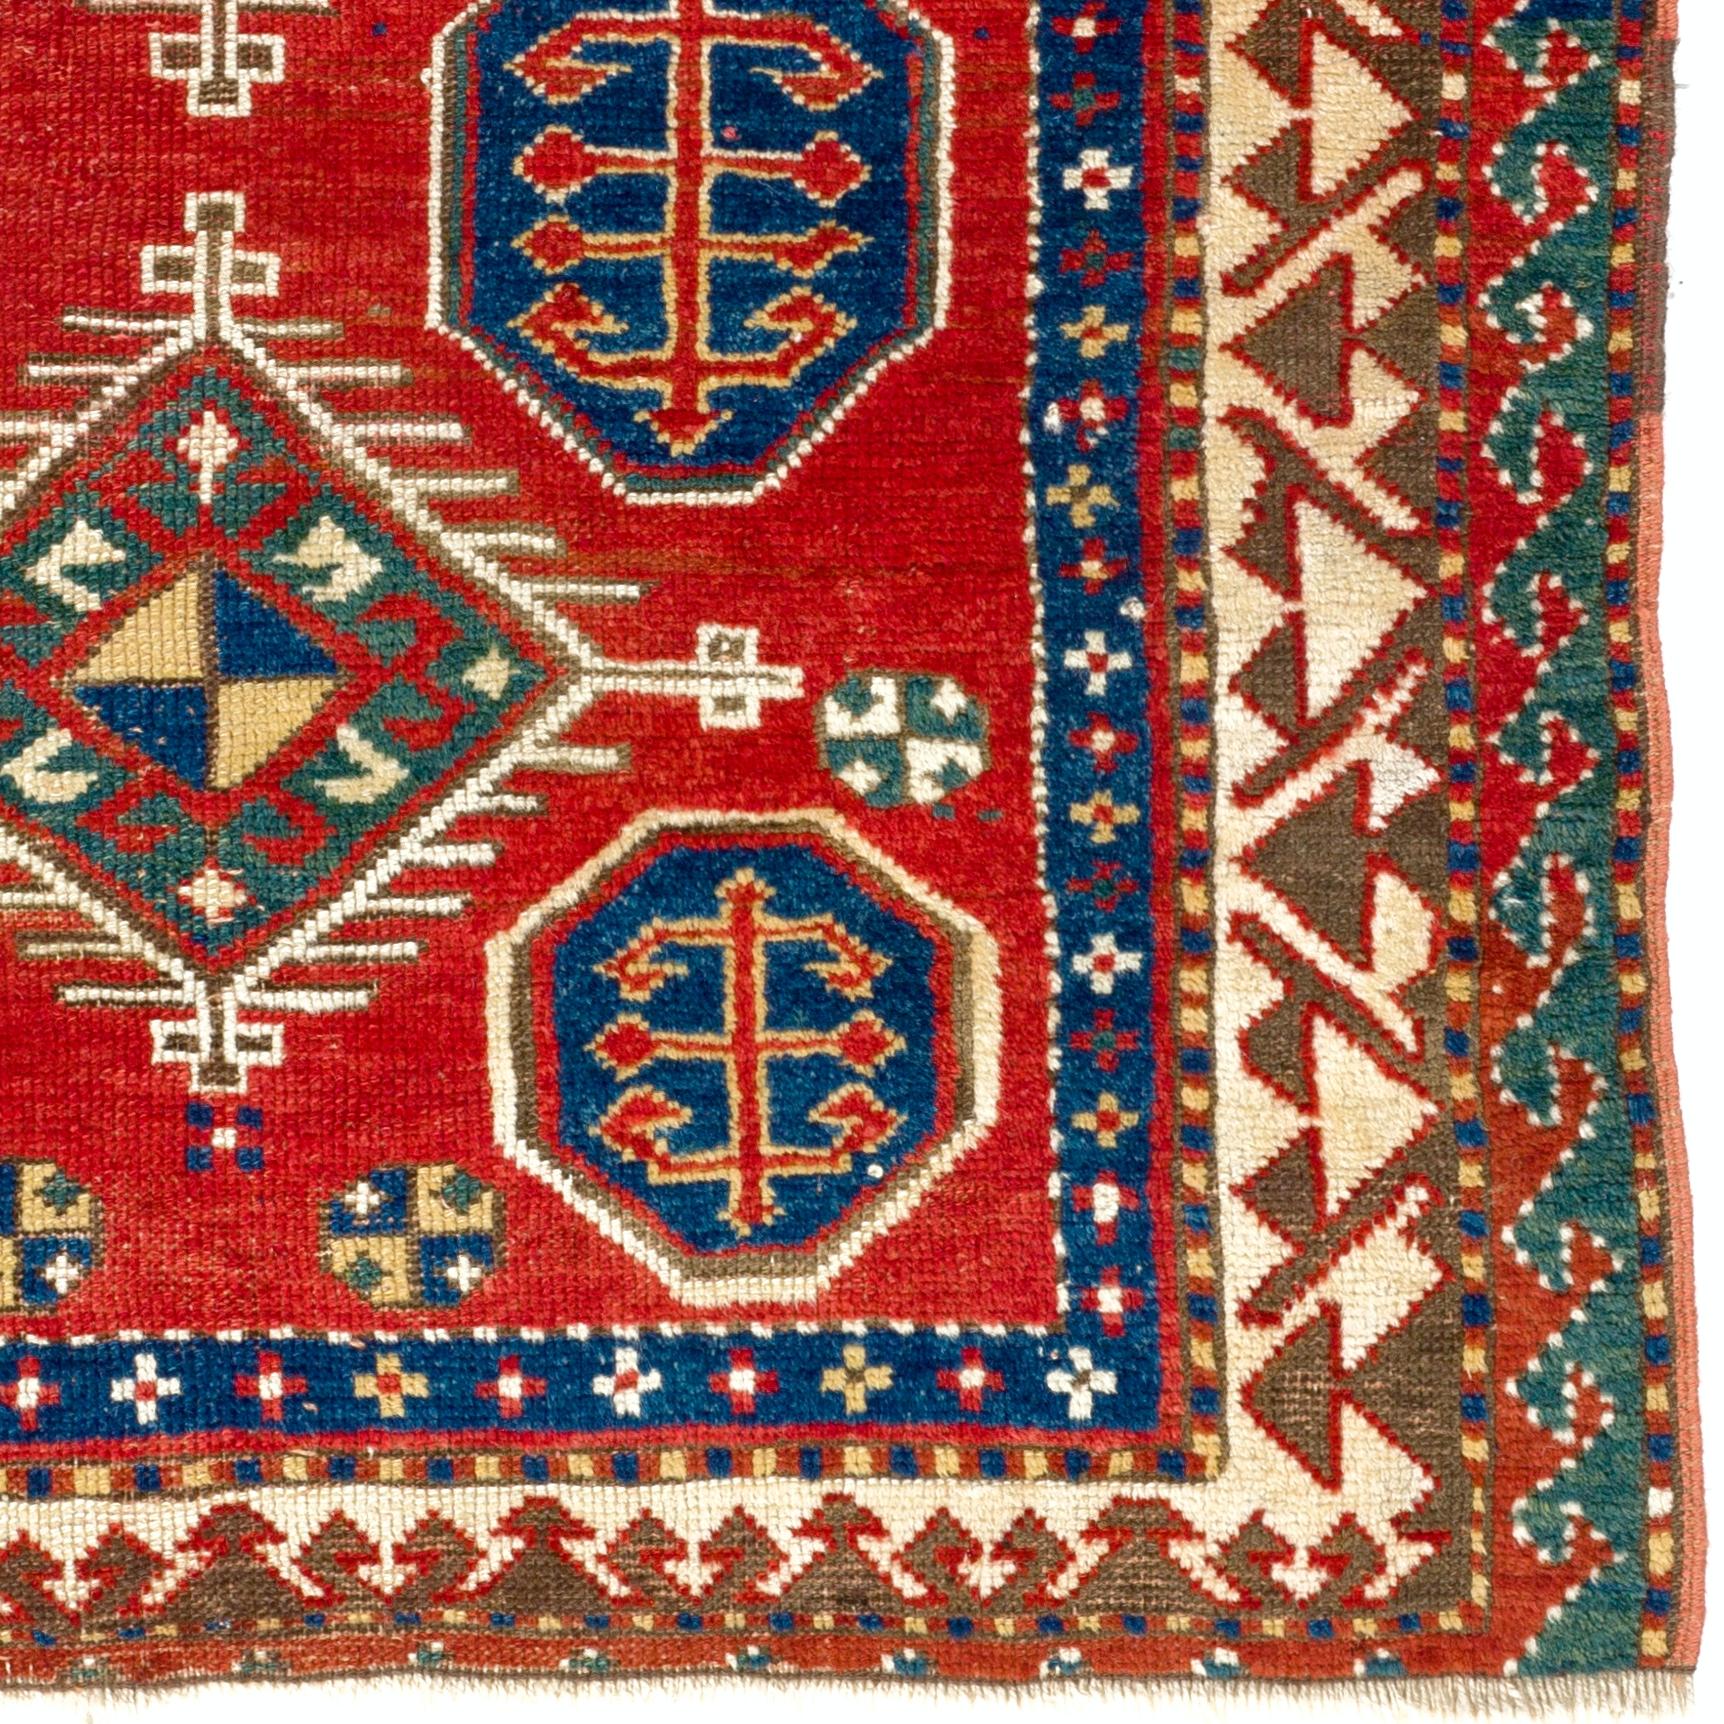 19th Century 3.5x3.9 Ft Rare Antique Caucasian Borchalo Kazak Prayer Rug, Ca 1875 For Sale